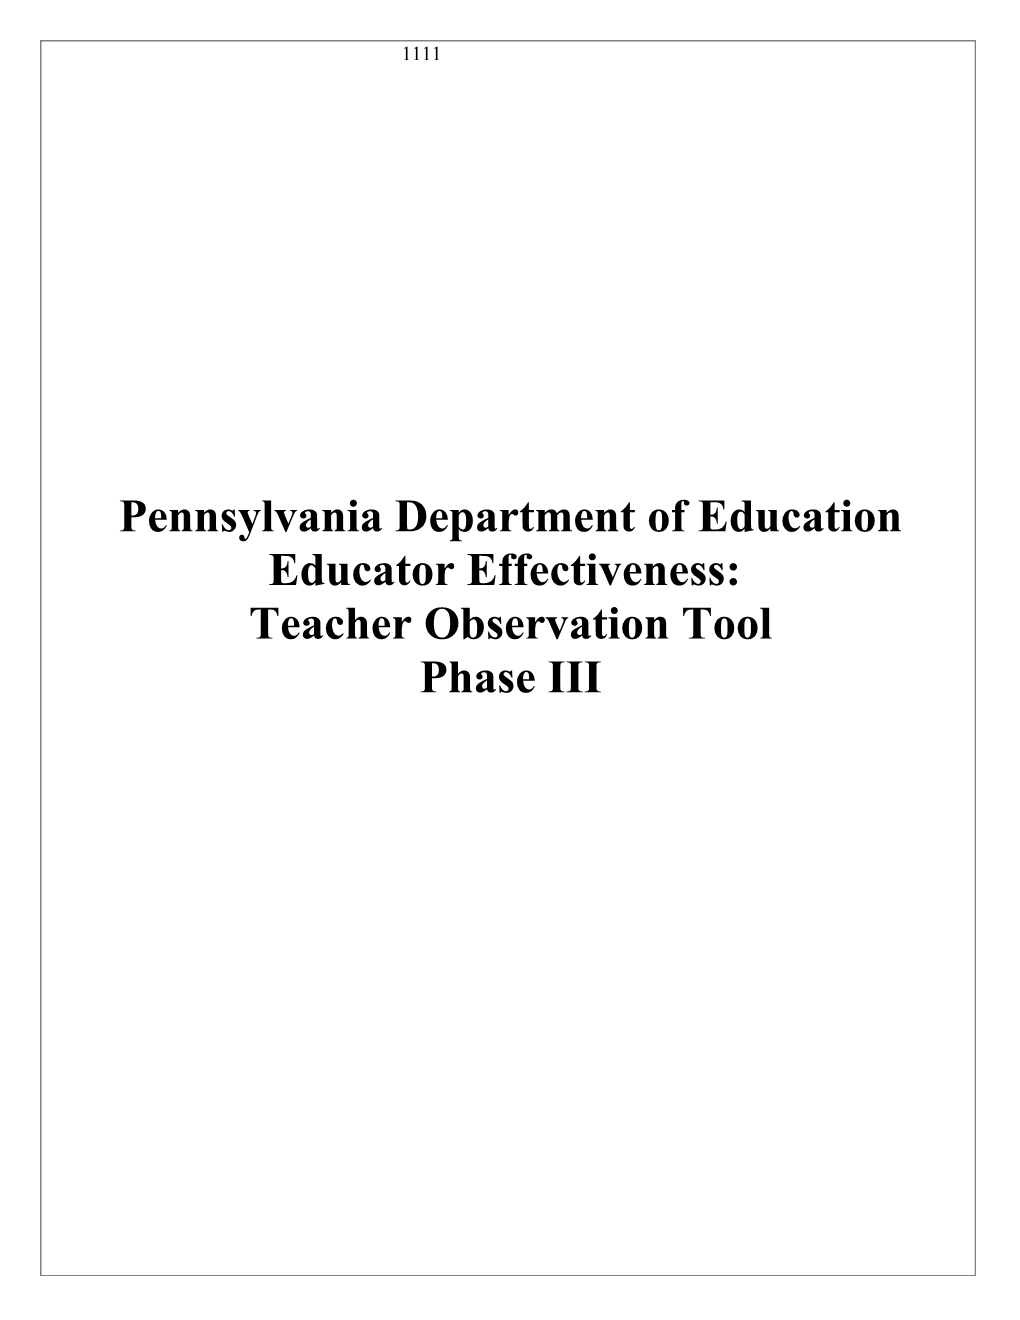 Teacher Observation Tool, Phase III 32